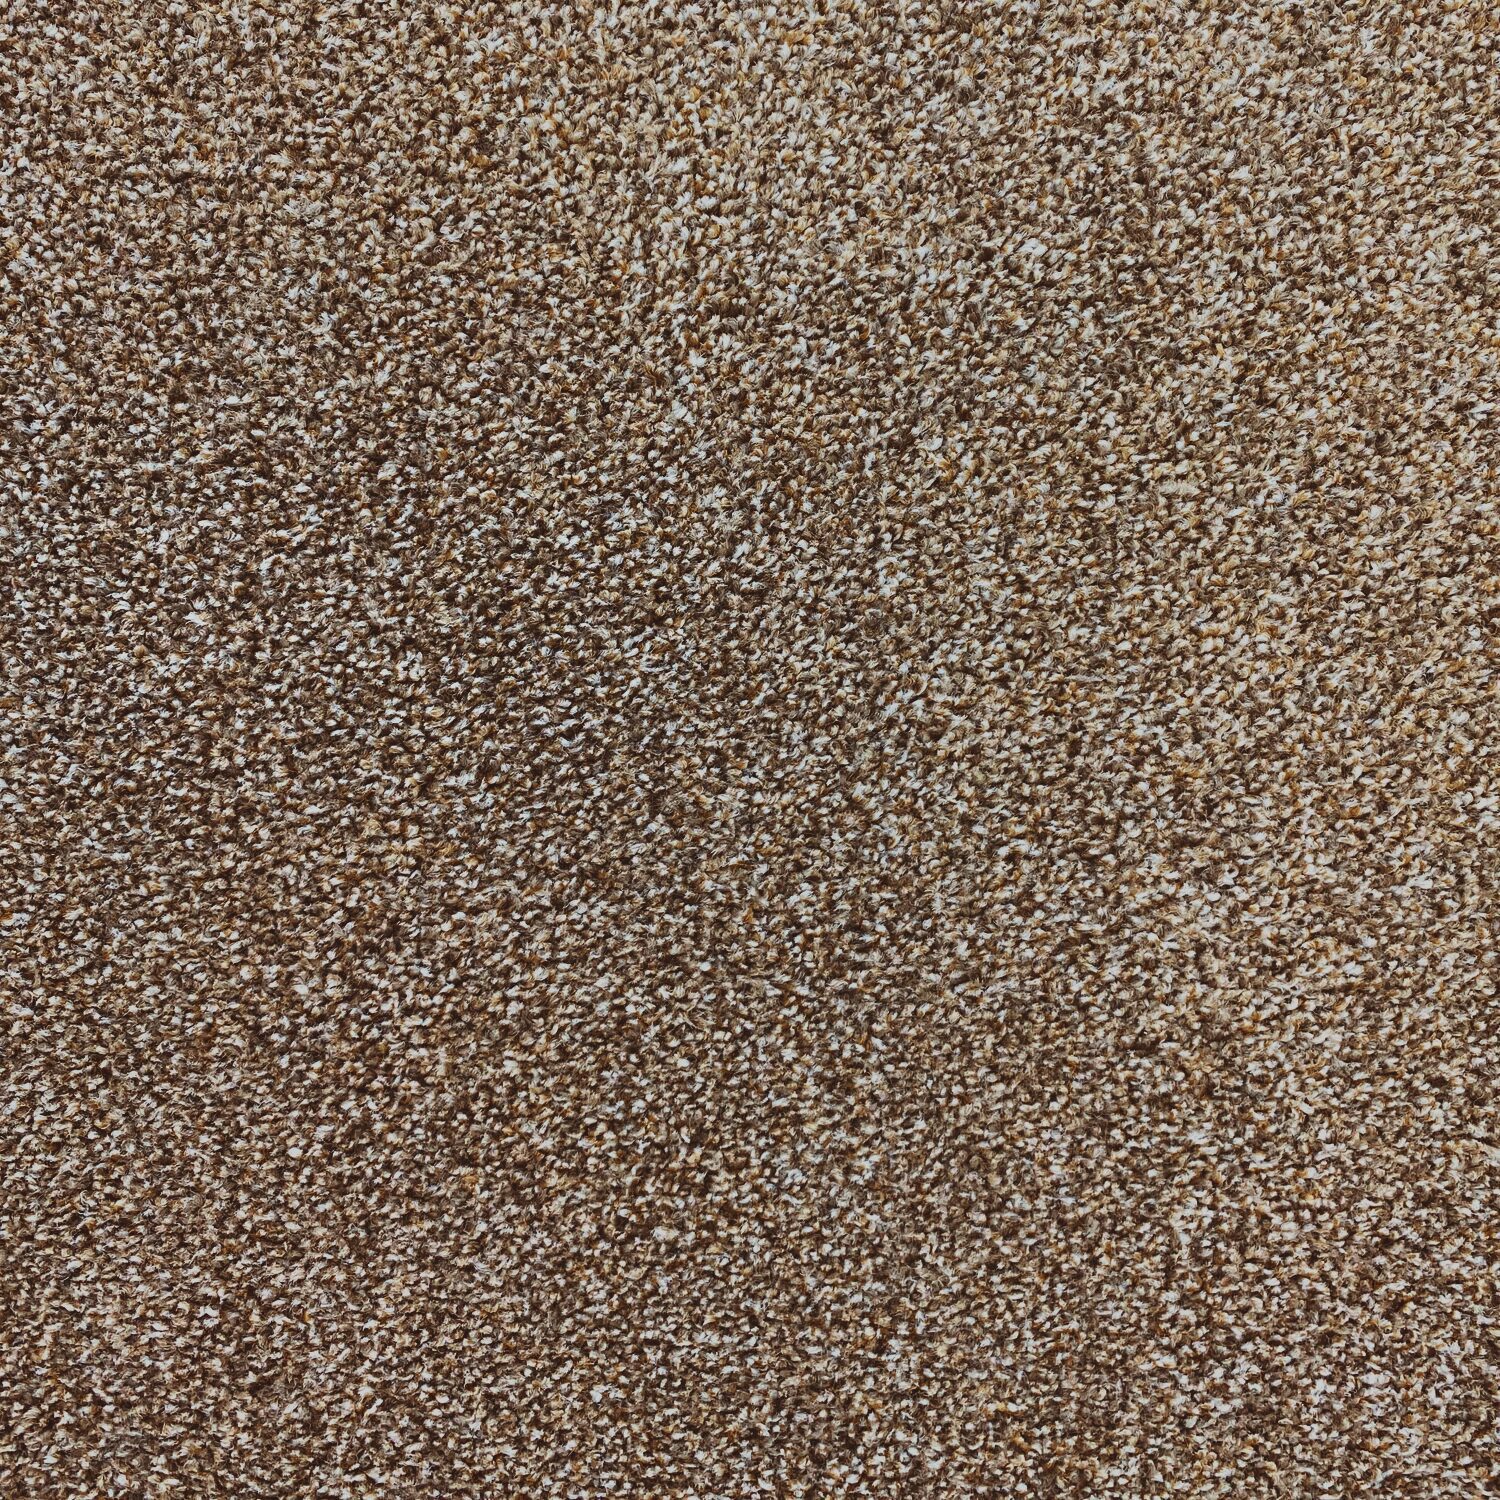 Carpet name: Smart Textures Autumn